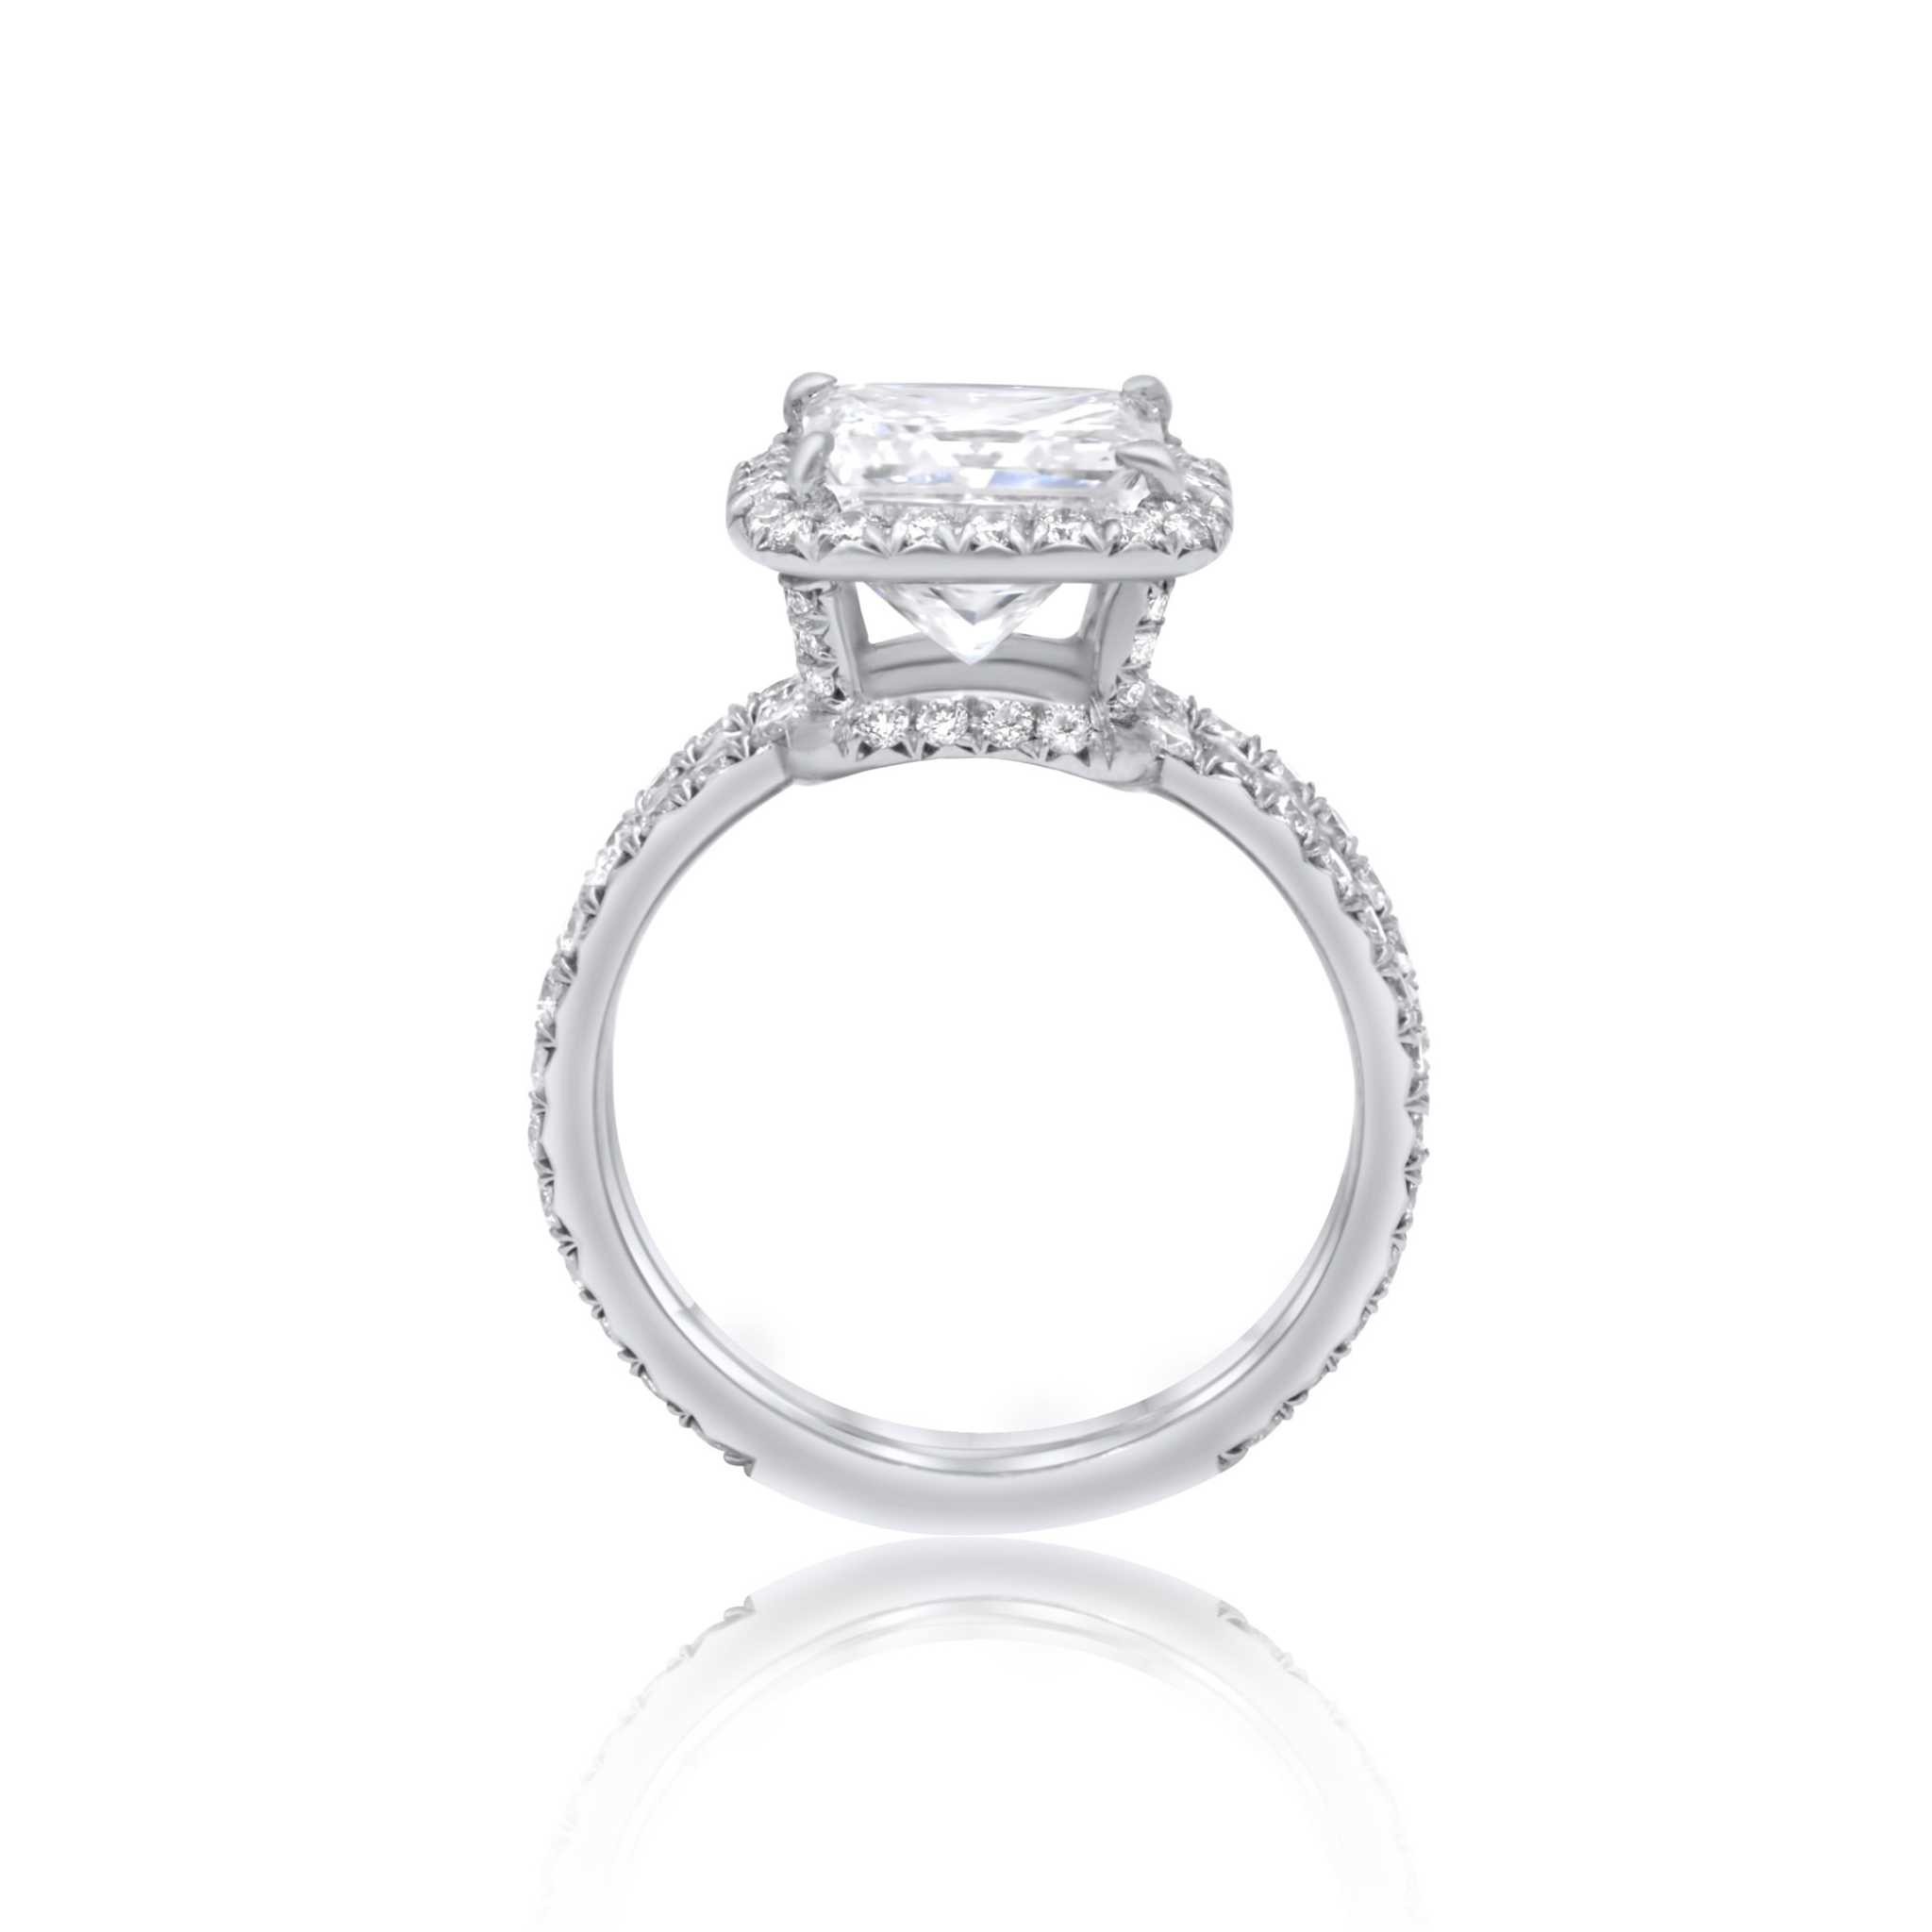 3ct Princess Cut Diamond Ring.jpg